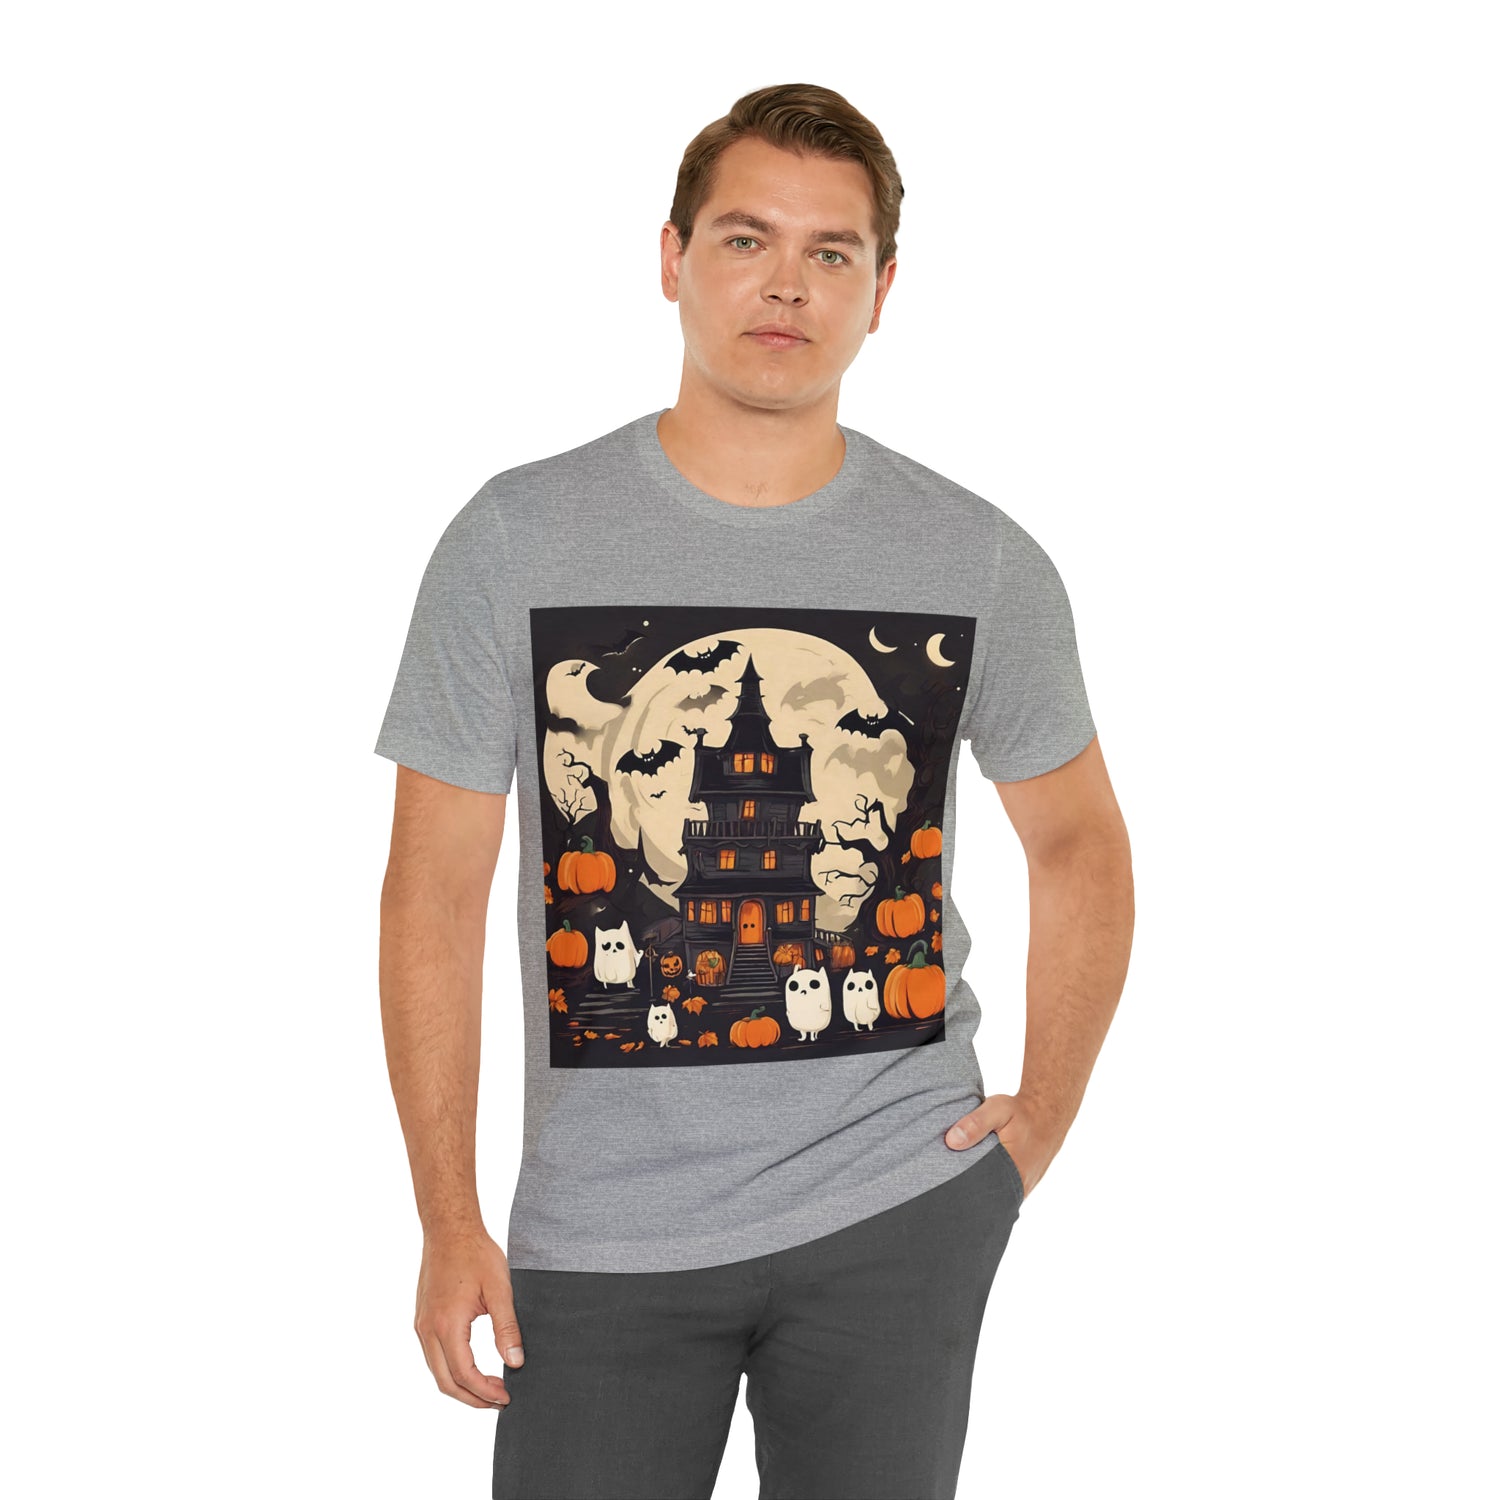 Halloween T-Shirt With Scary House | Halloween Gift Ideas T-Shirt Petrova Designs